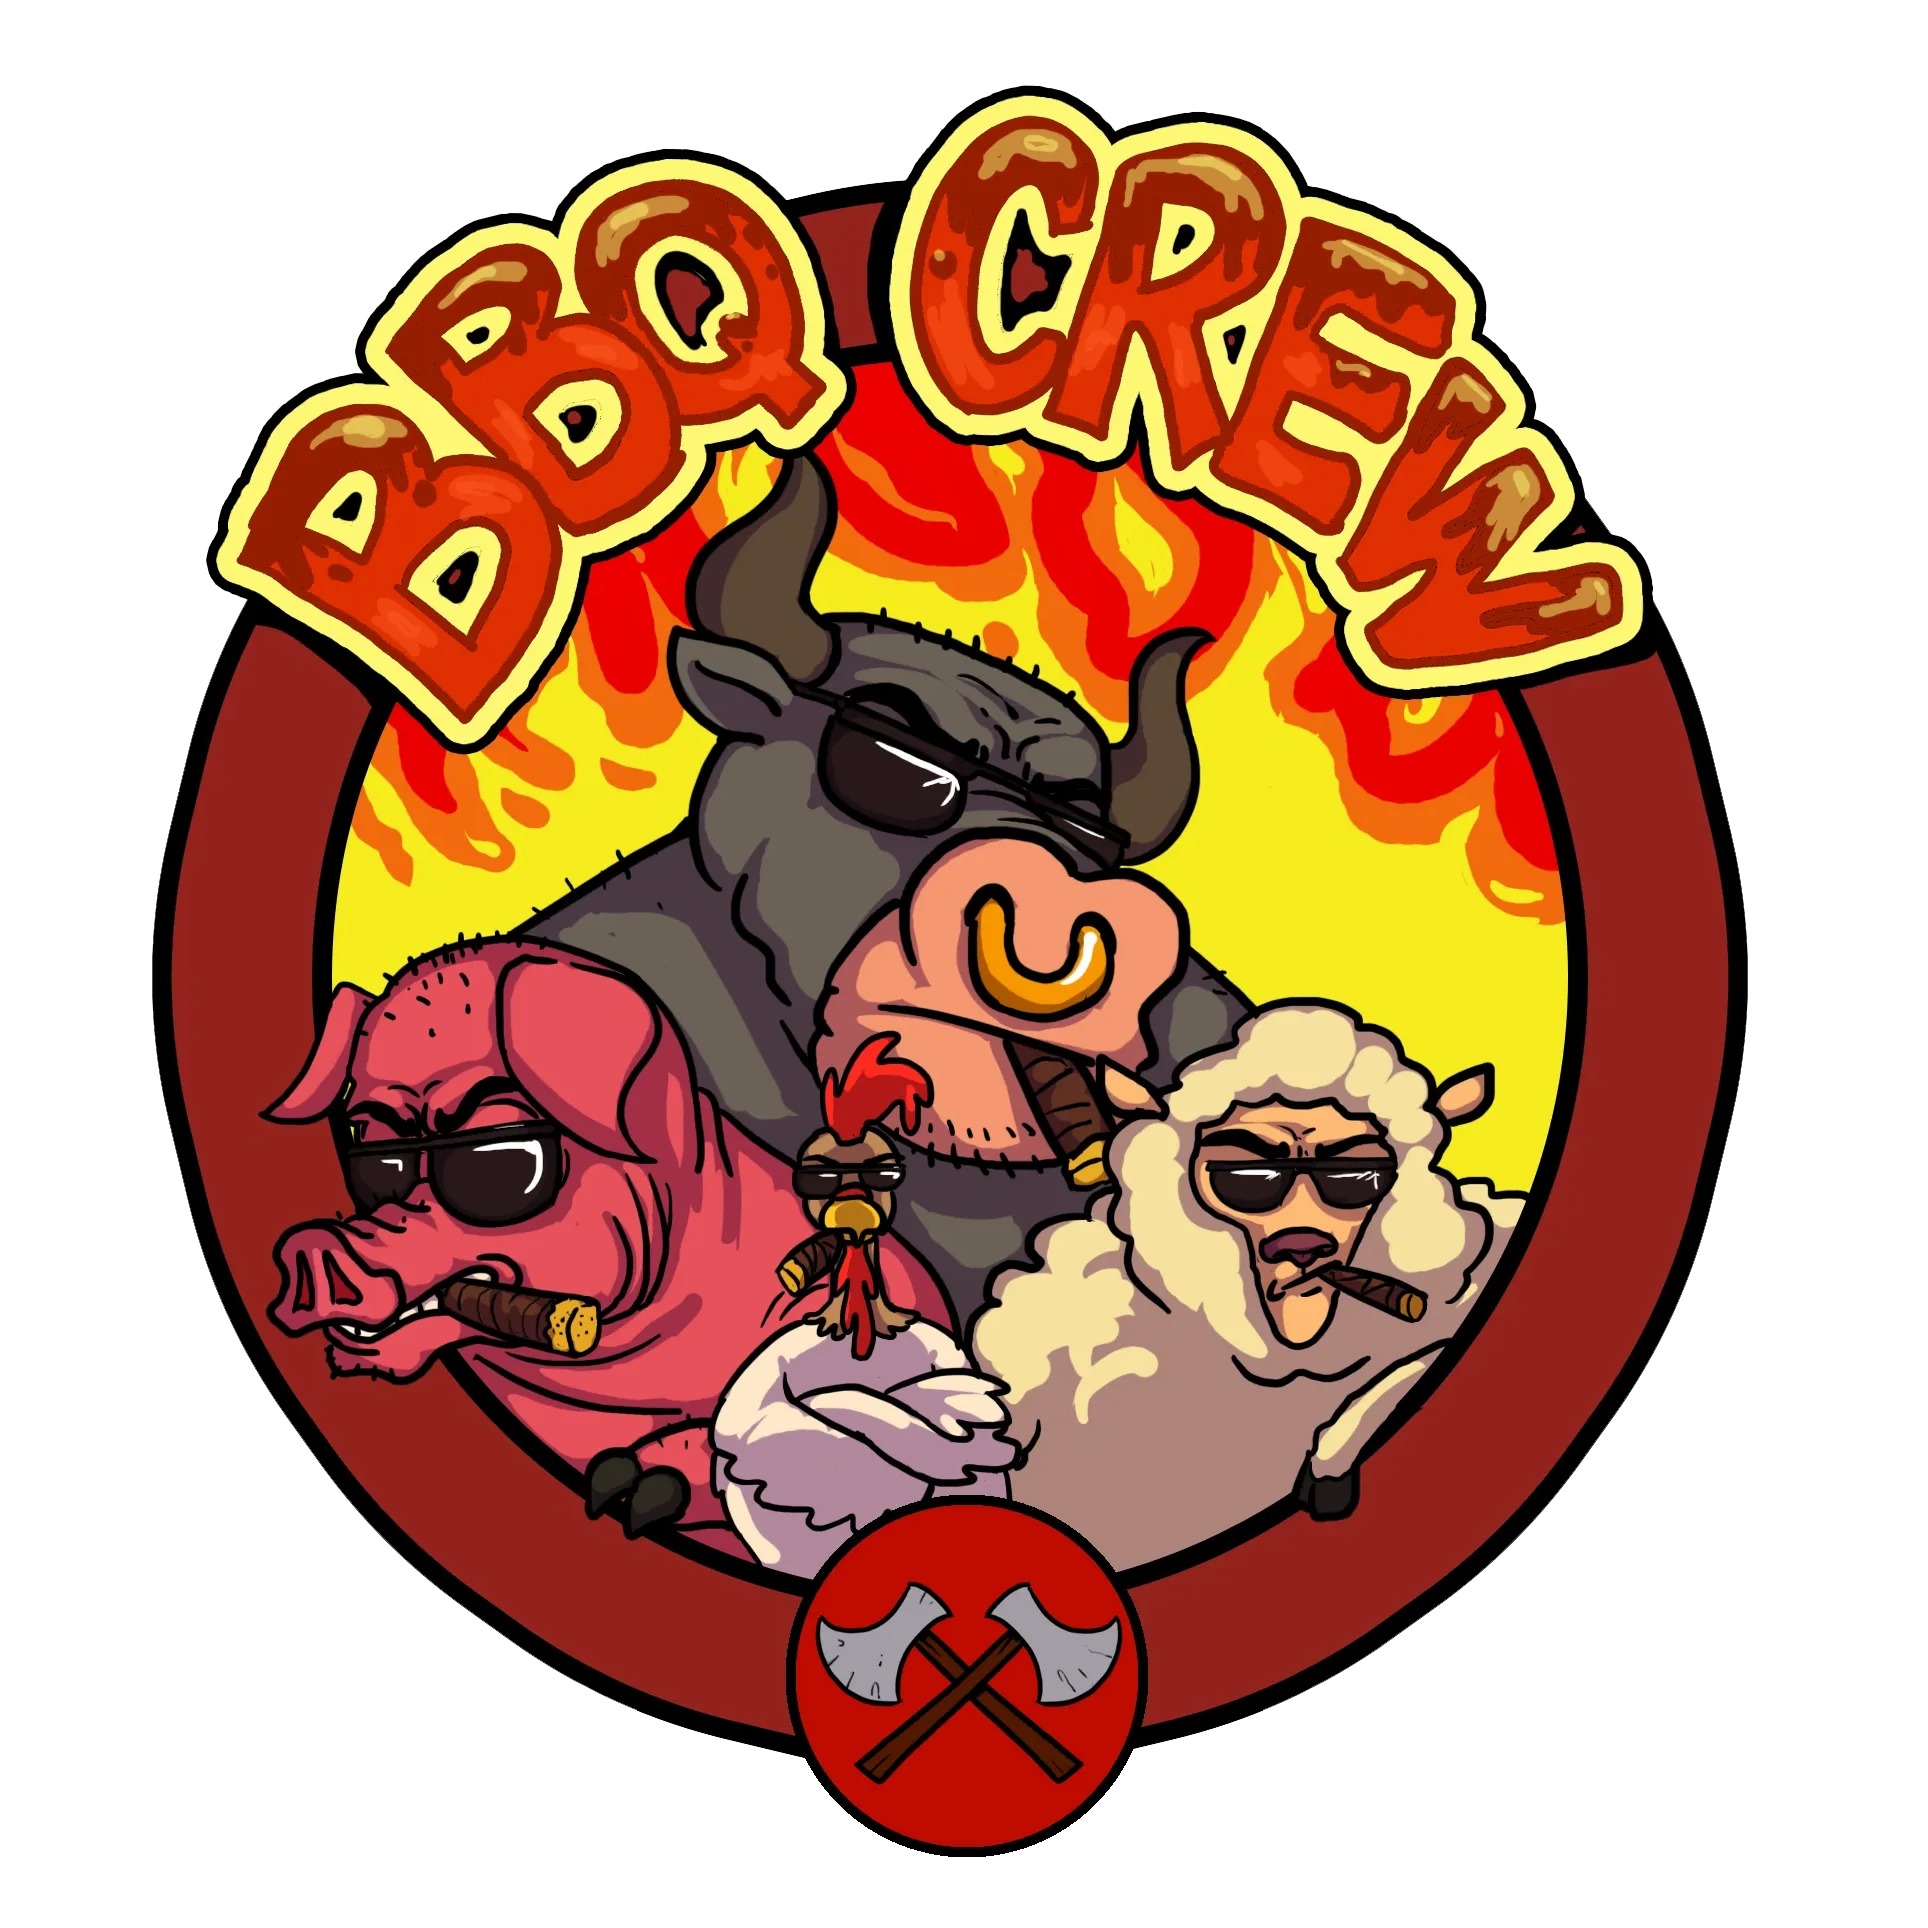 The BBQ Crew Logo